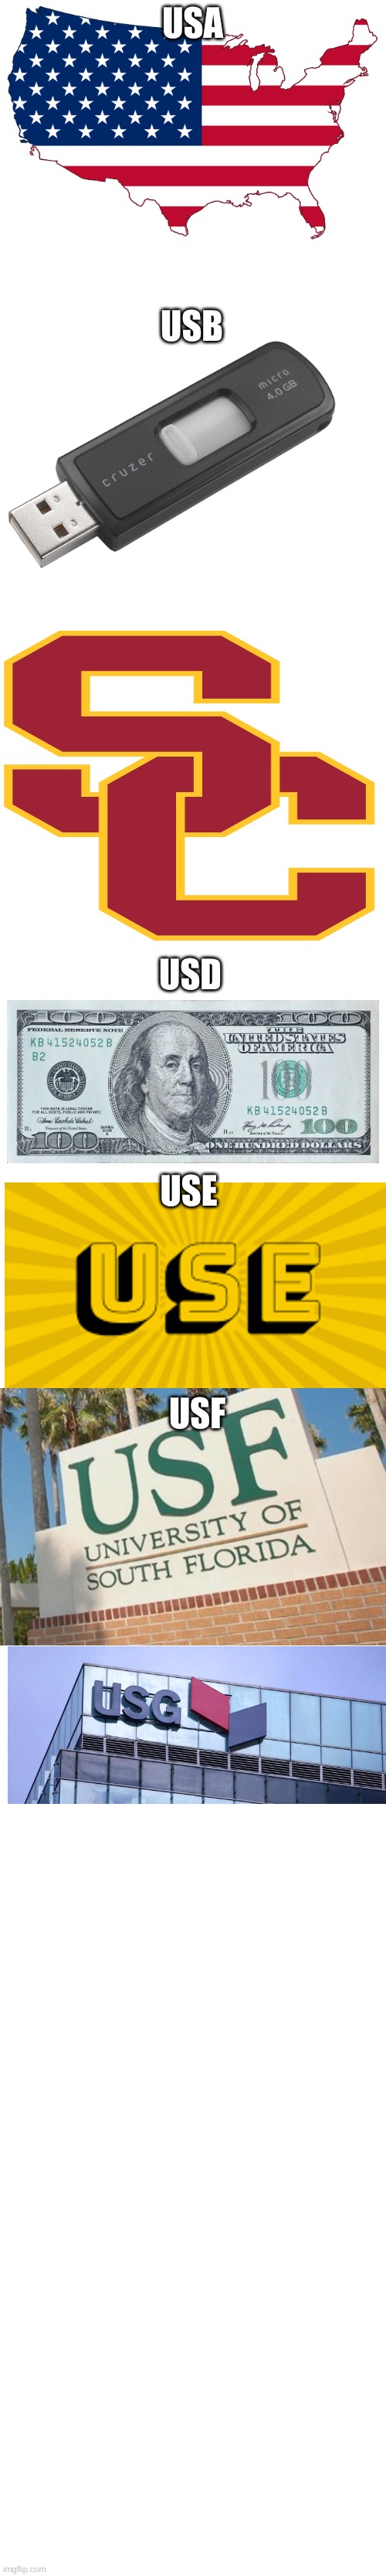 USA USB USD USE USF | made w/ Imgflip meme maker